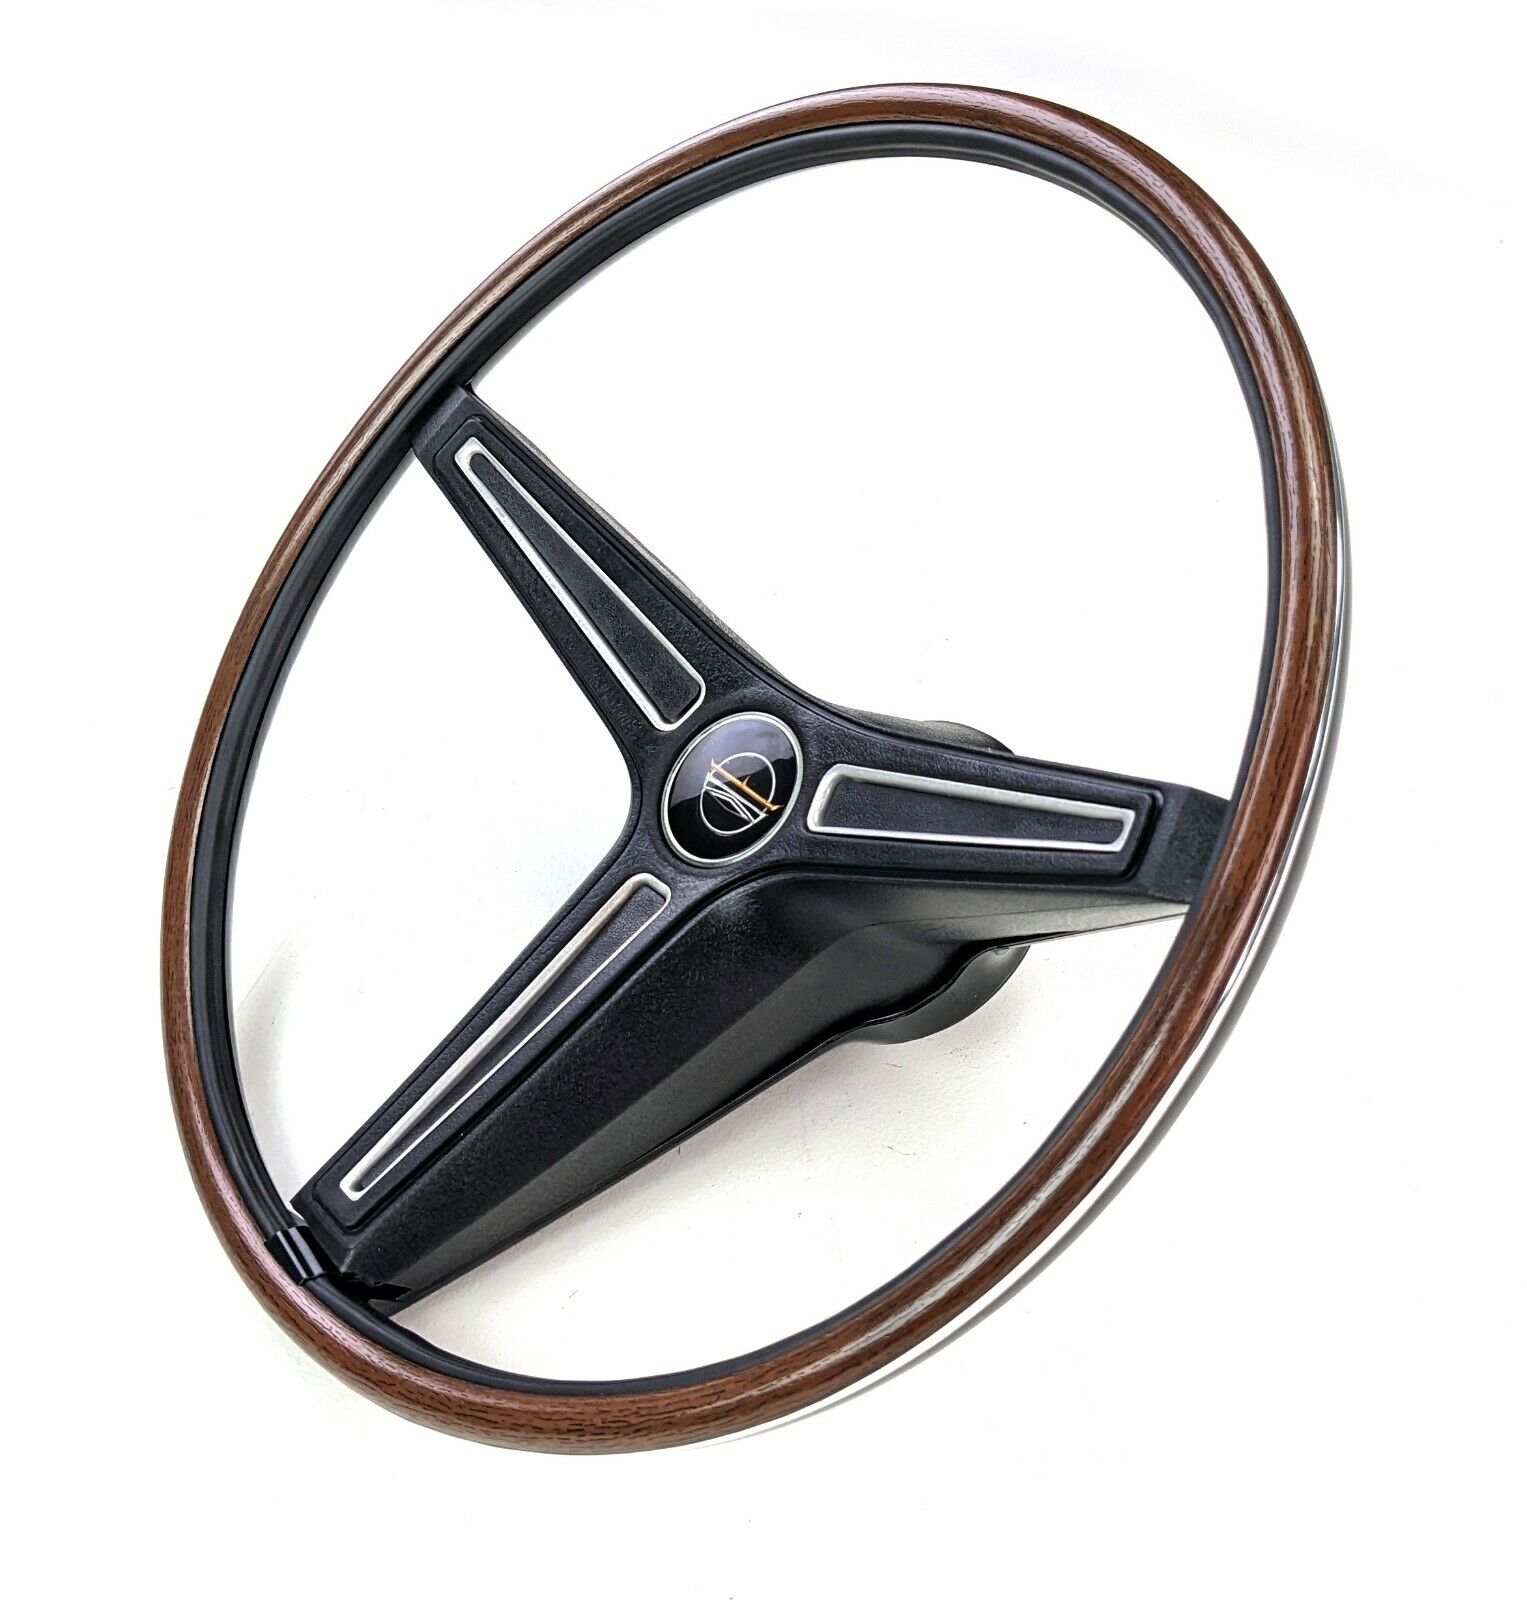 NEW COMPLETE 1970 - 1973 Torino / Falcon Deluxe Rim Blow Steering Wheel Complete